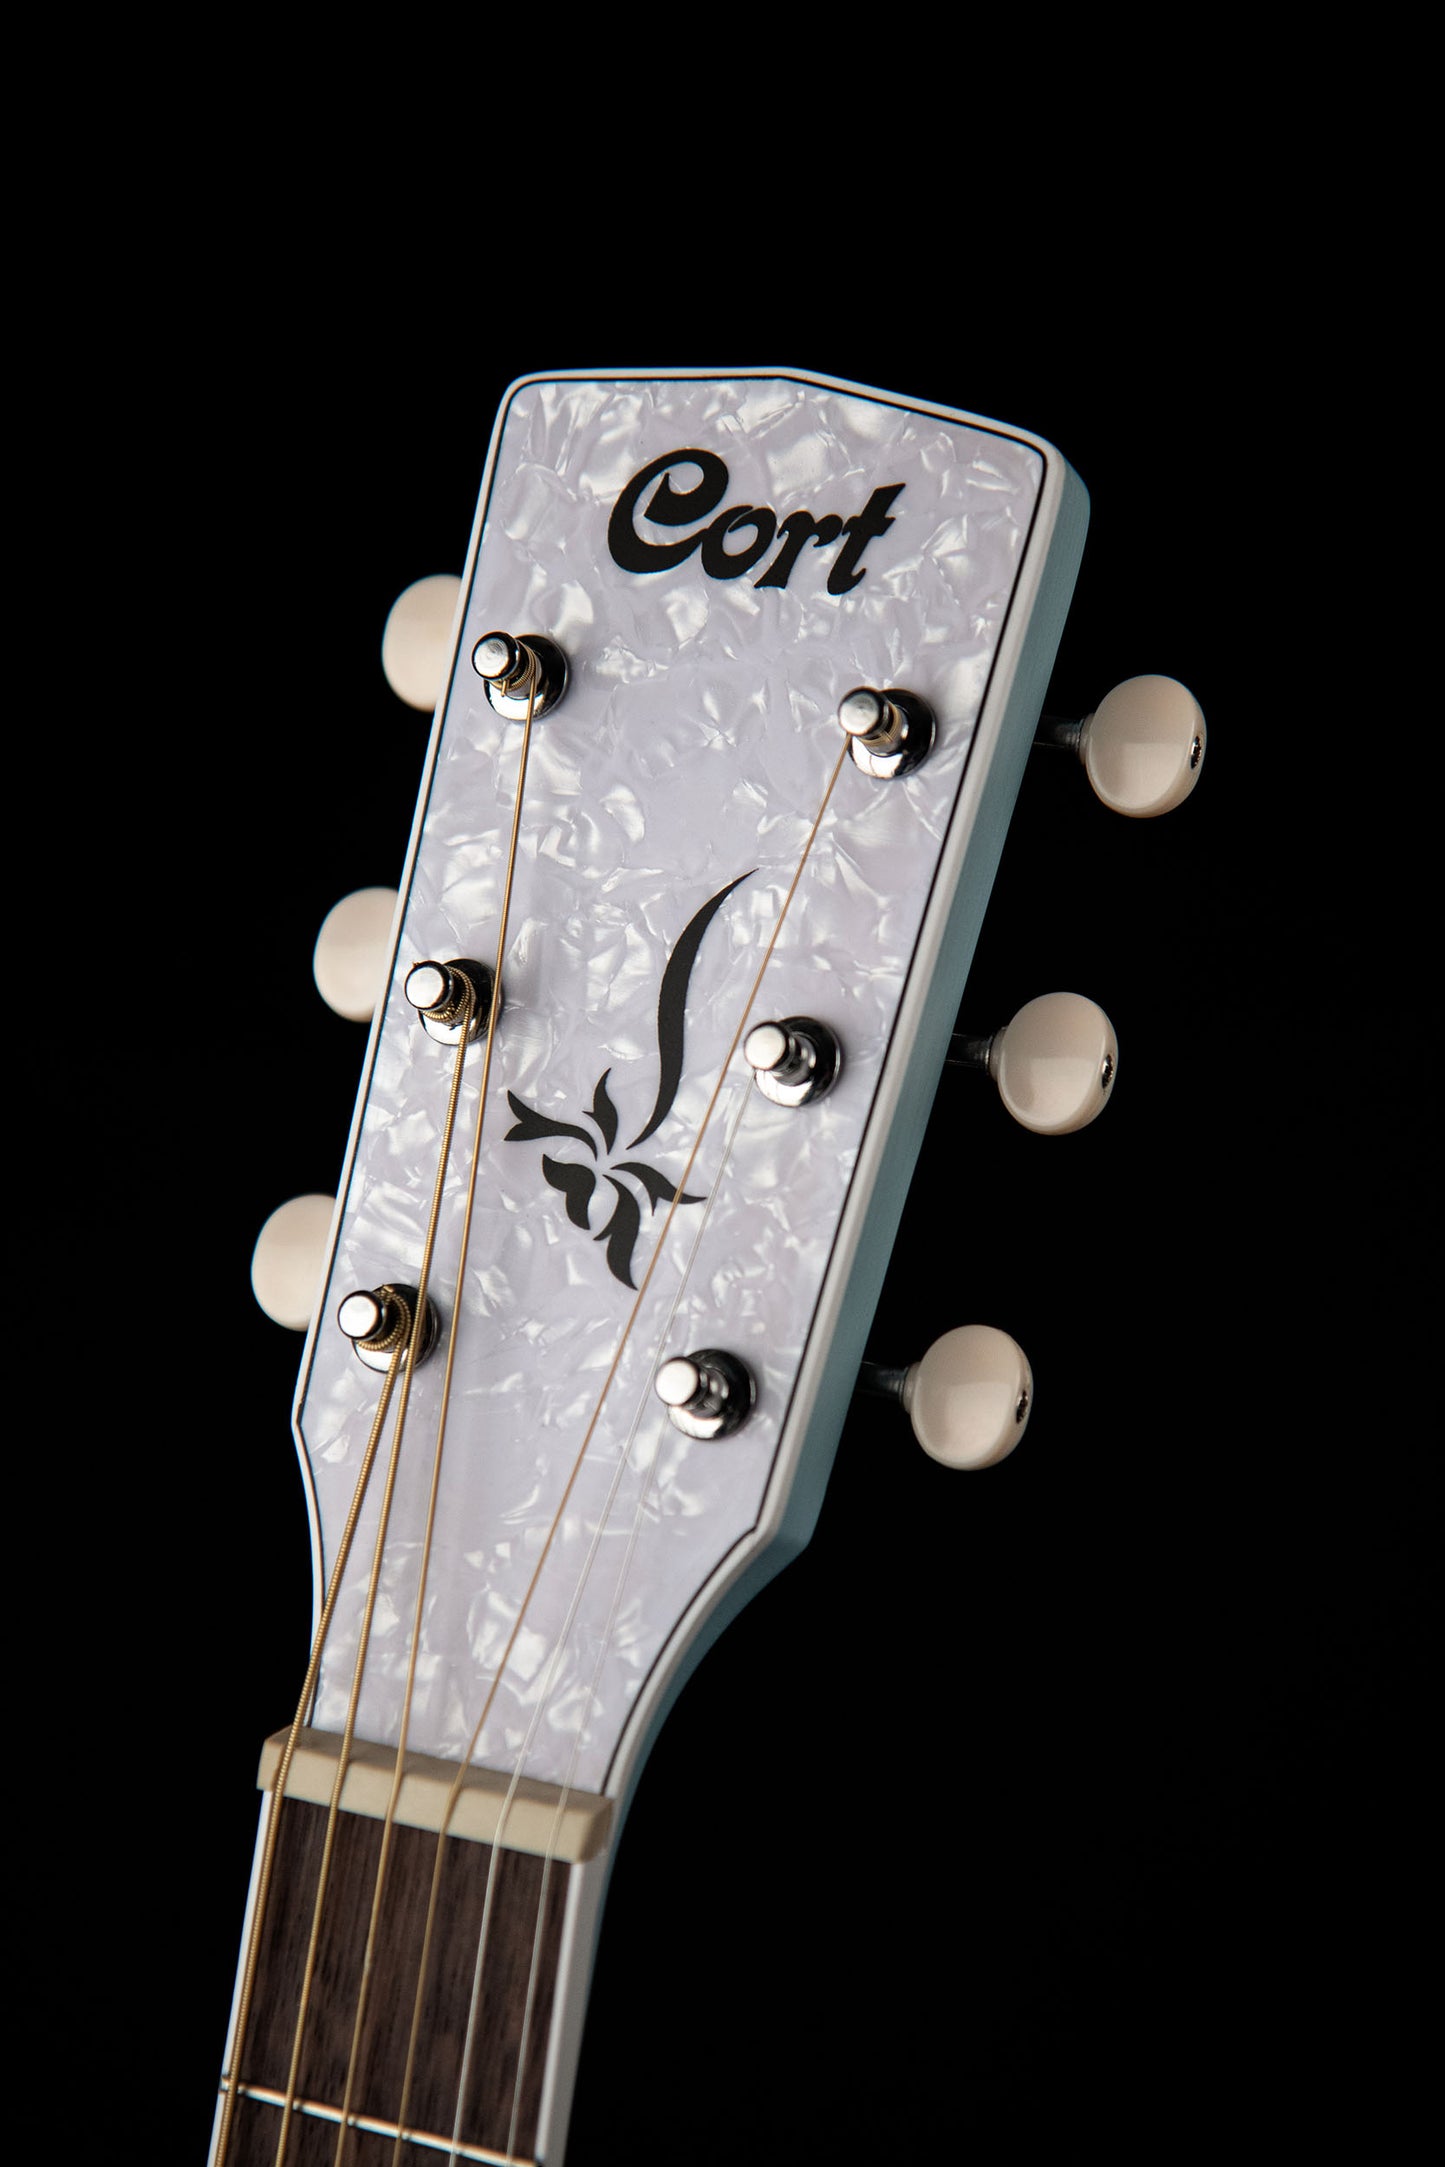 Cort  Jade Series Acoustic Electric Cutaway Guitar. Sky Blue Open Pore